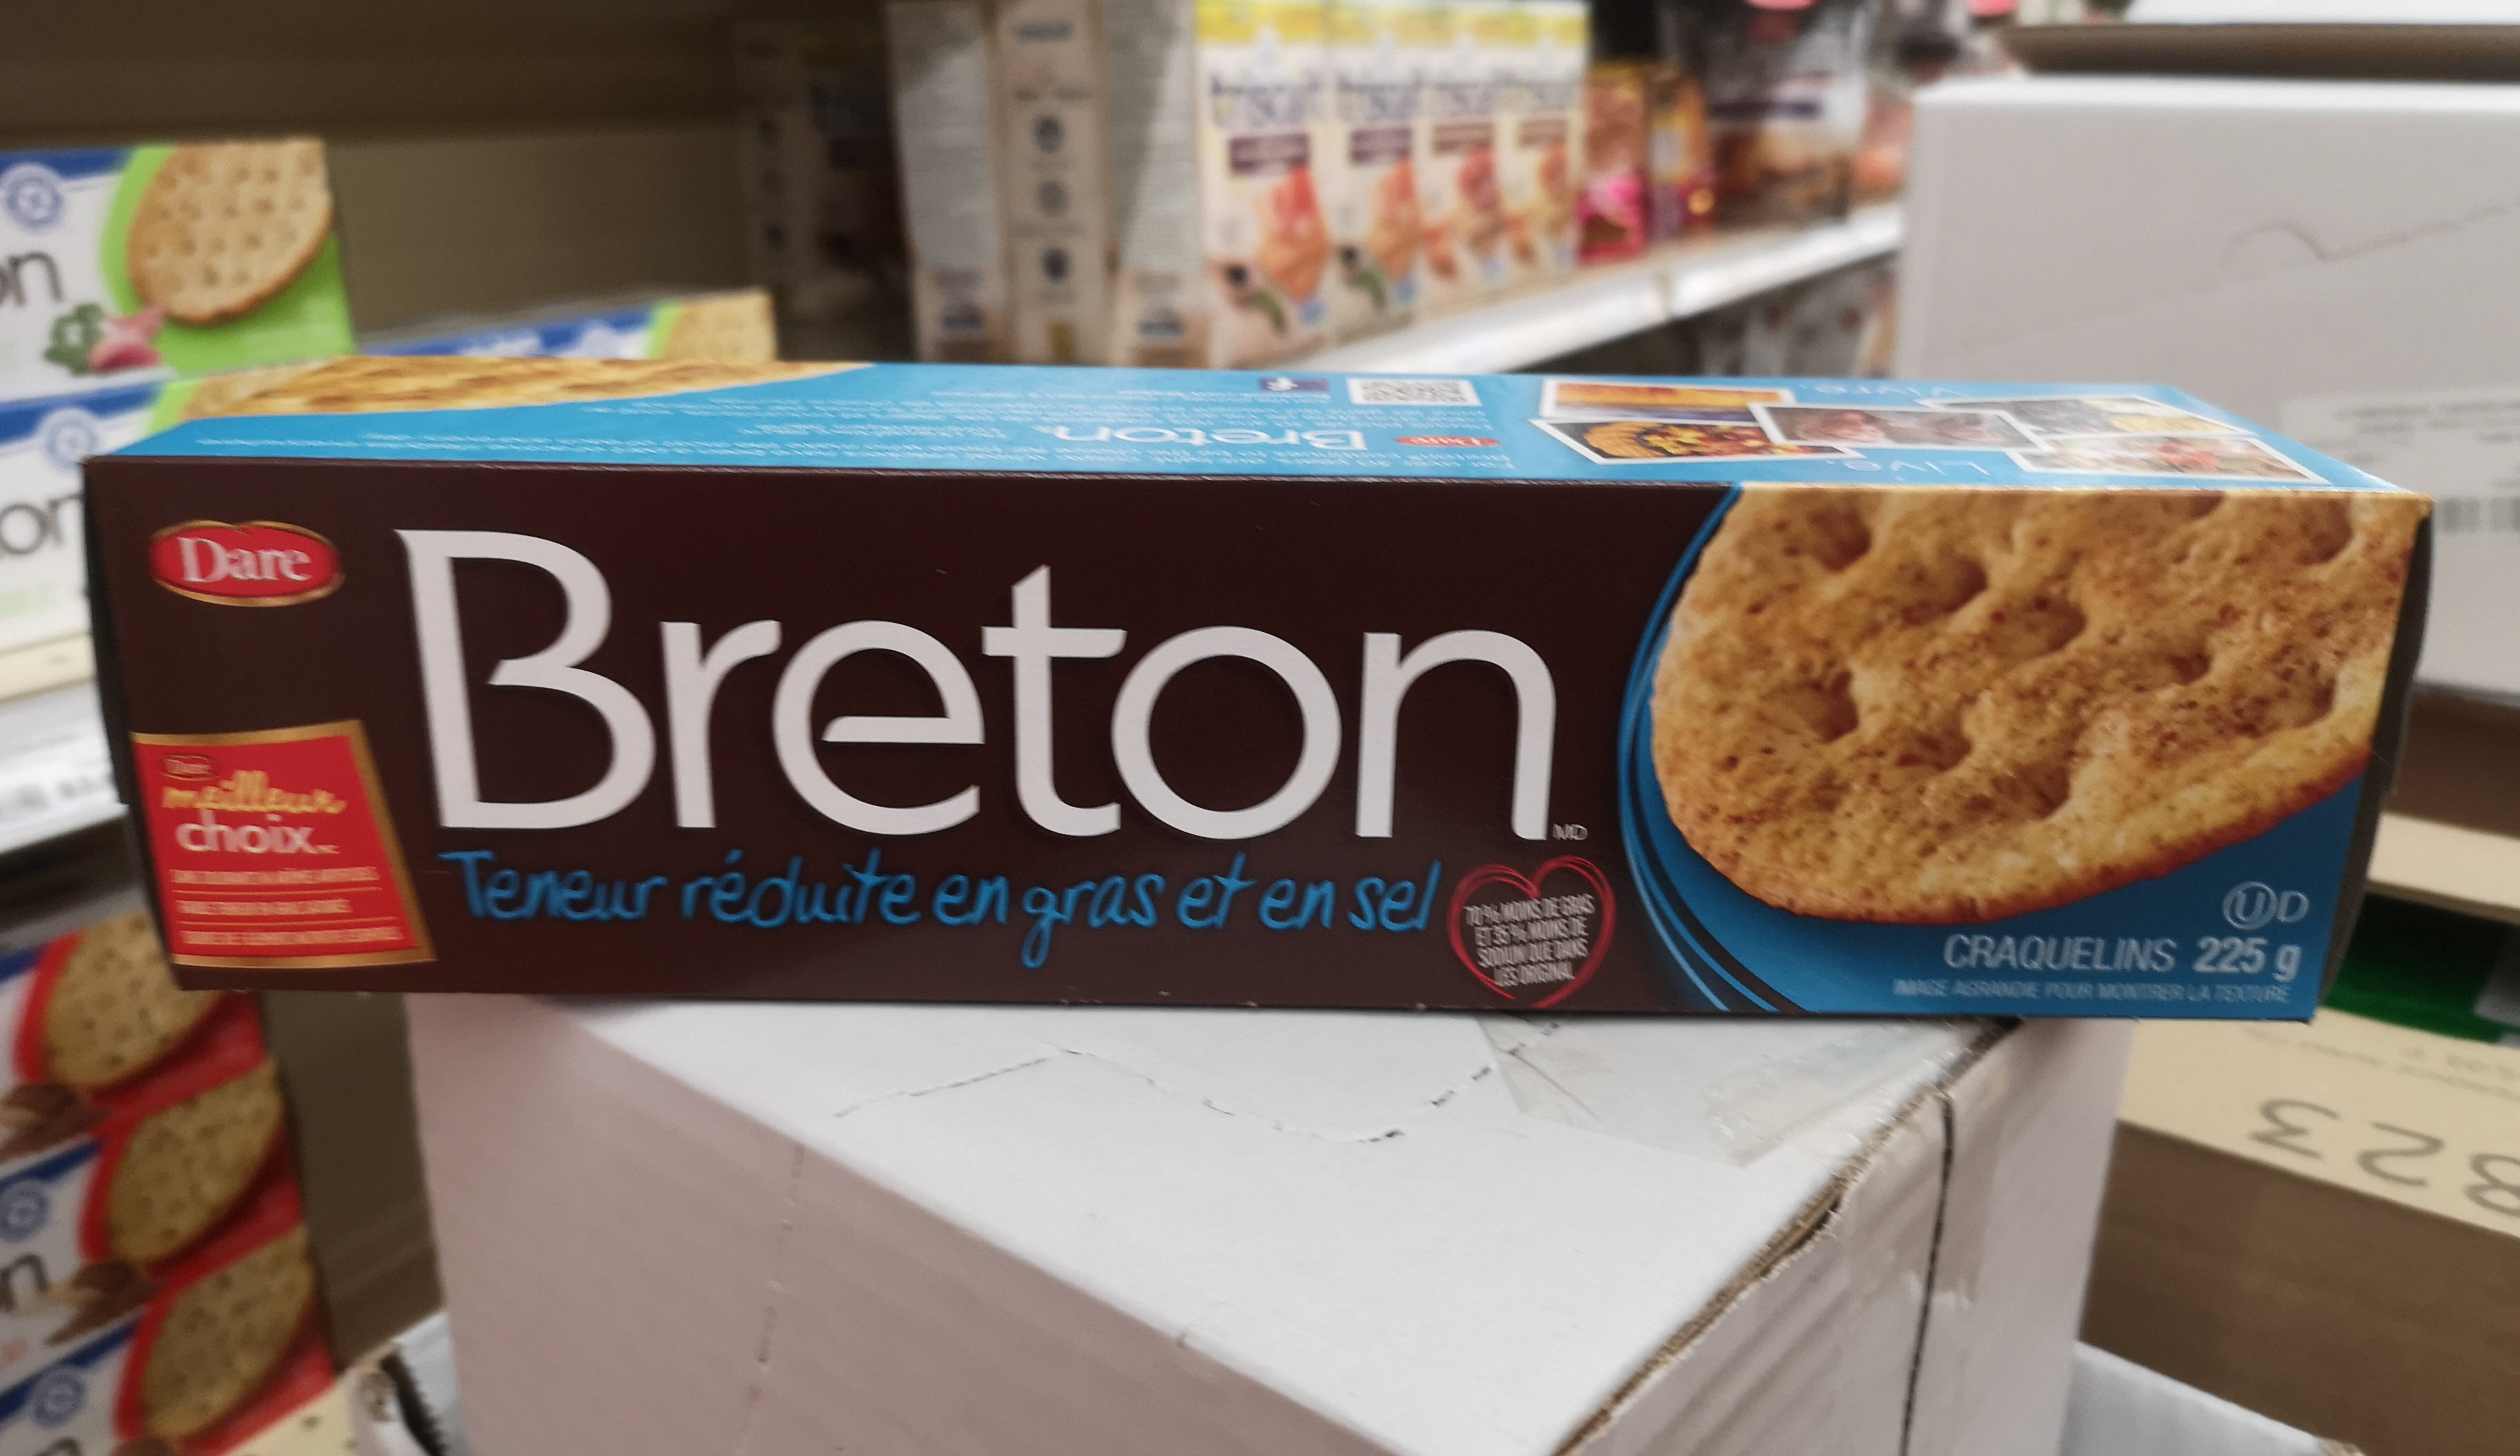 Dare, breton, reduced fat & salt crackers - Product